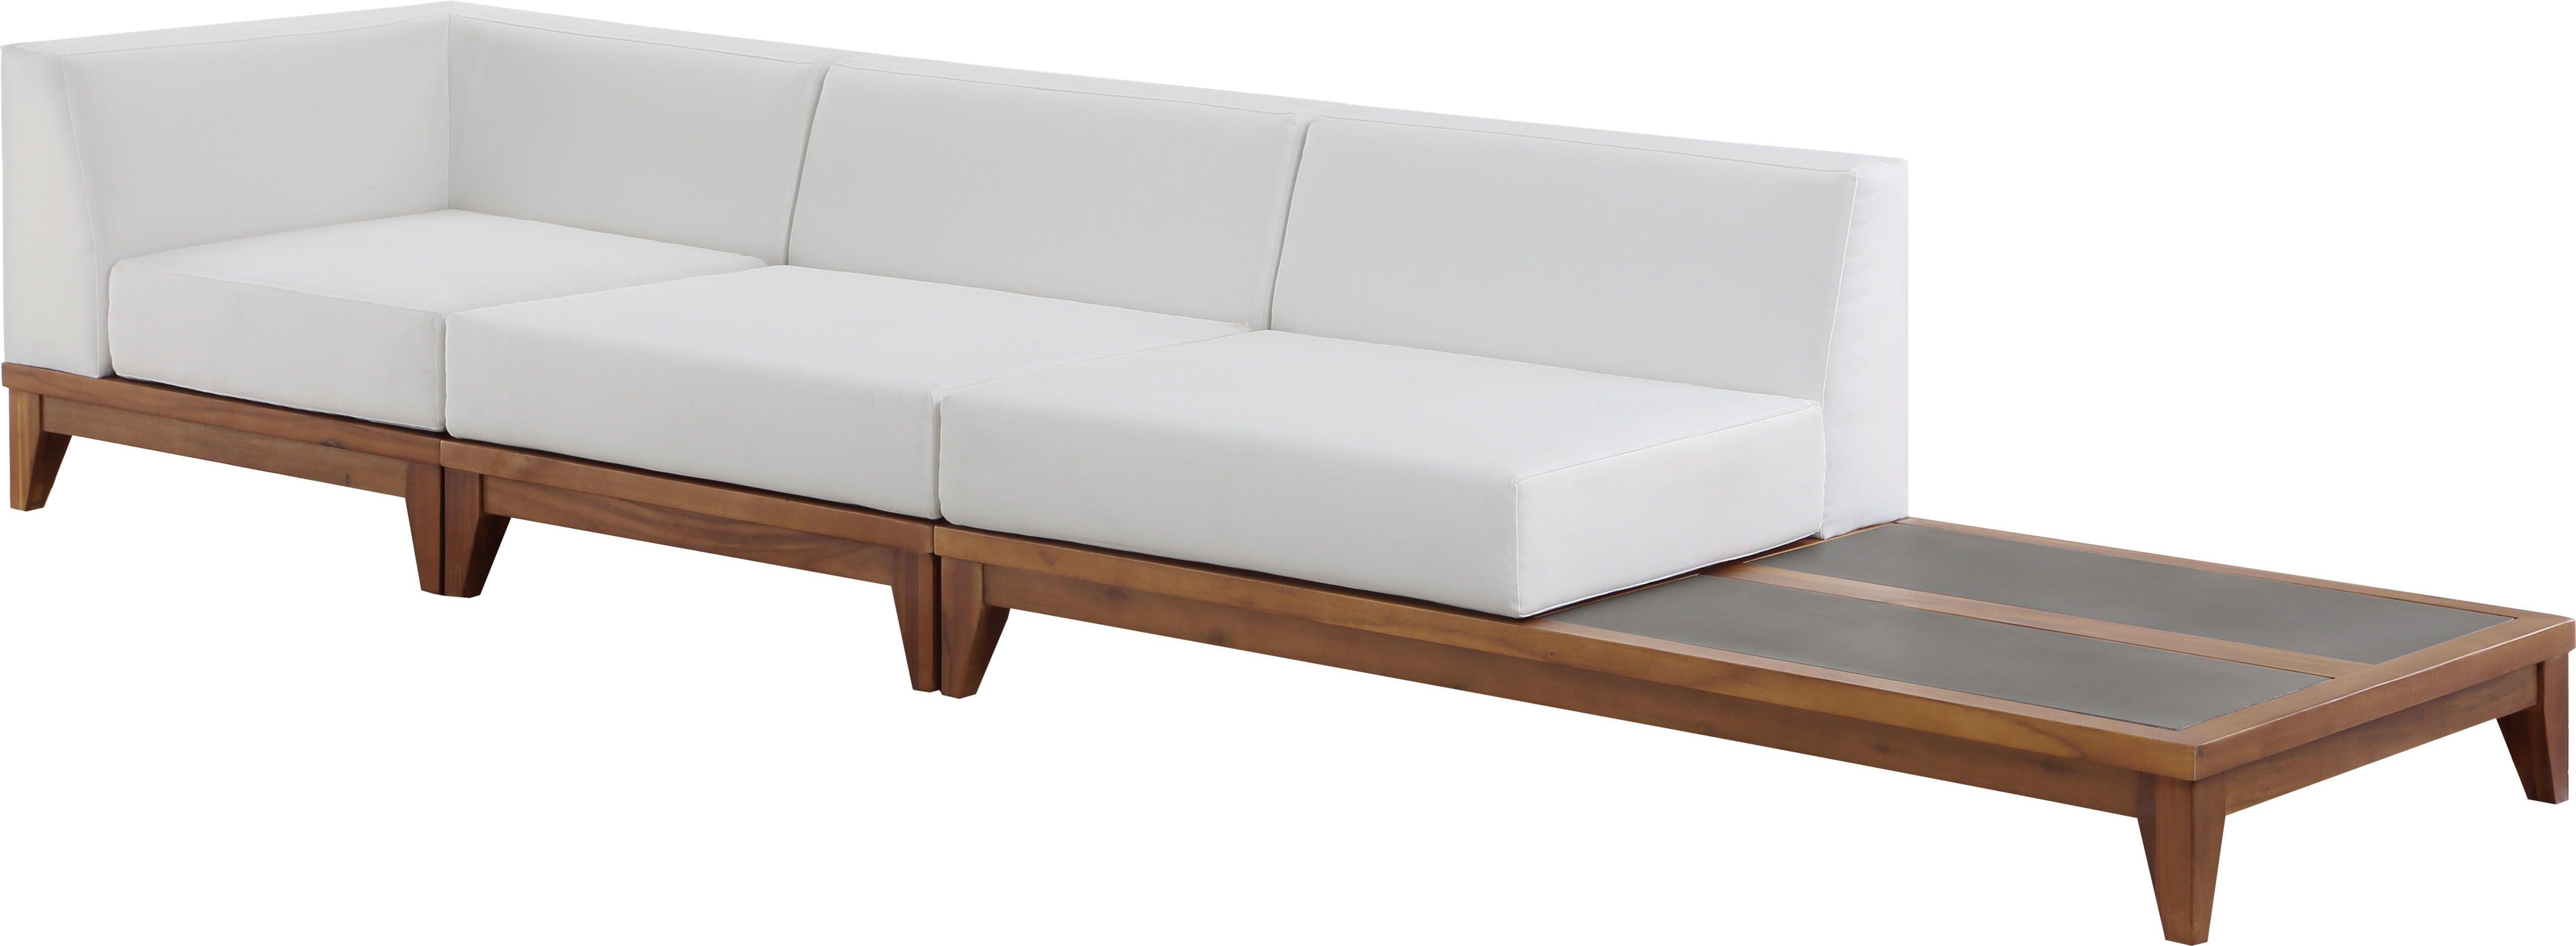 Meridian Furniture - Rio - Modular Sofa - Off White - Concrete - Modern & Contemporary - 5th Avenue Furniture